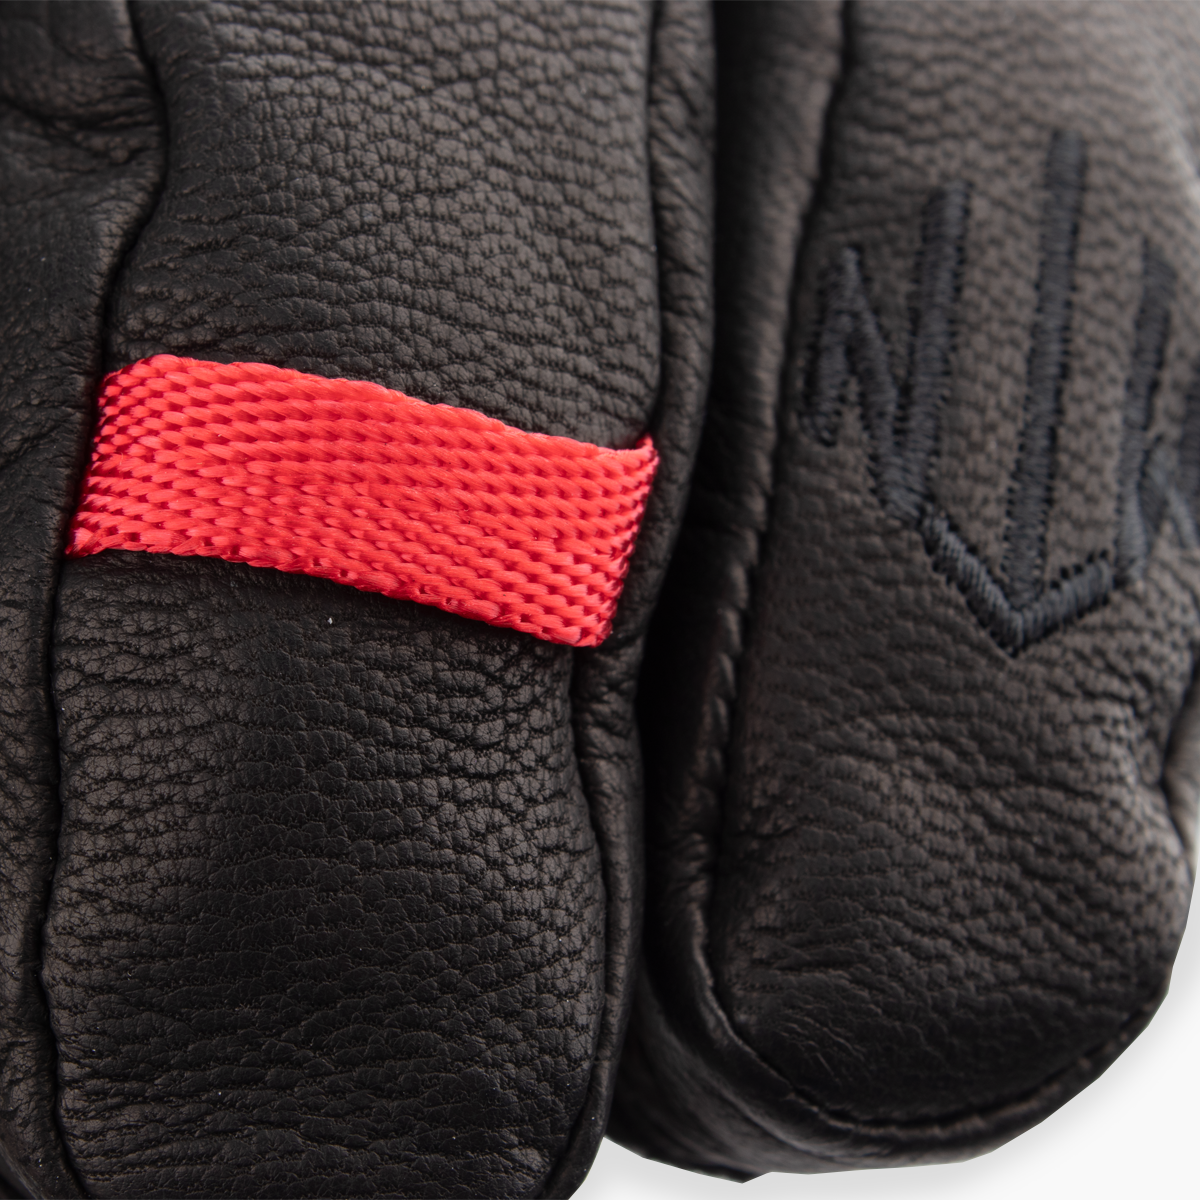 Primaloft® MTN Utility Glove - Black